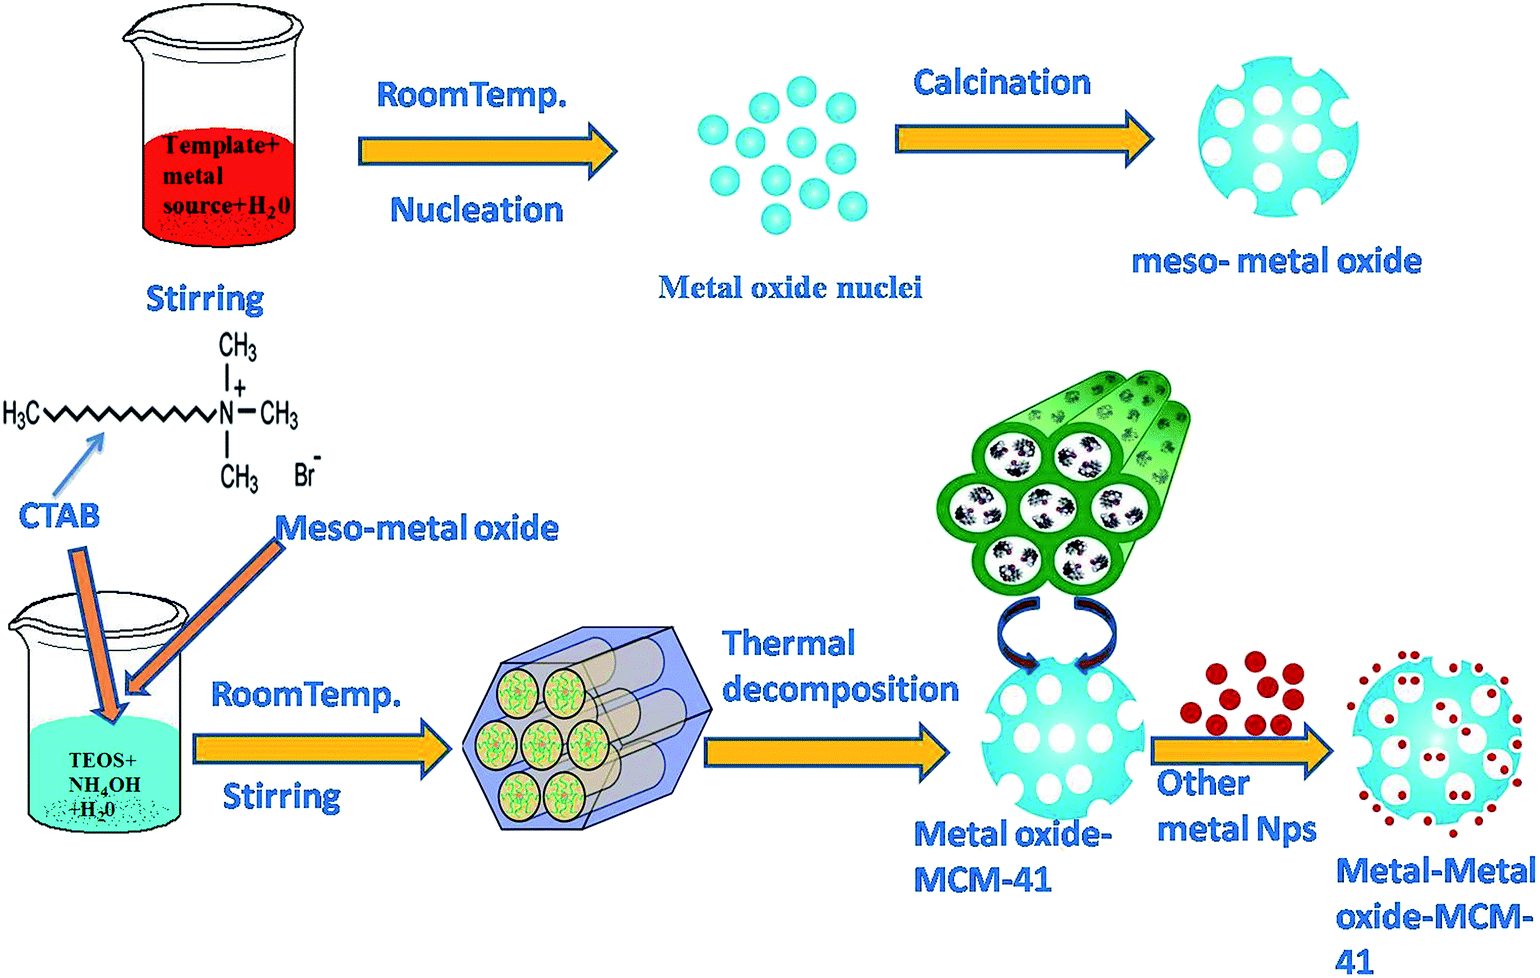 Transition metal/metal oxide modified MCM-41 for pollutant degradation and  hydrogen energy production: a review - RSC Advances (RSC Publishing)  DOI:10.1039/C5RA14555D